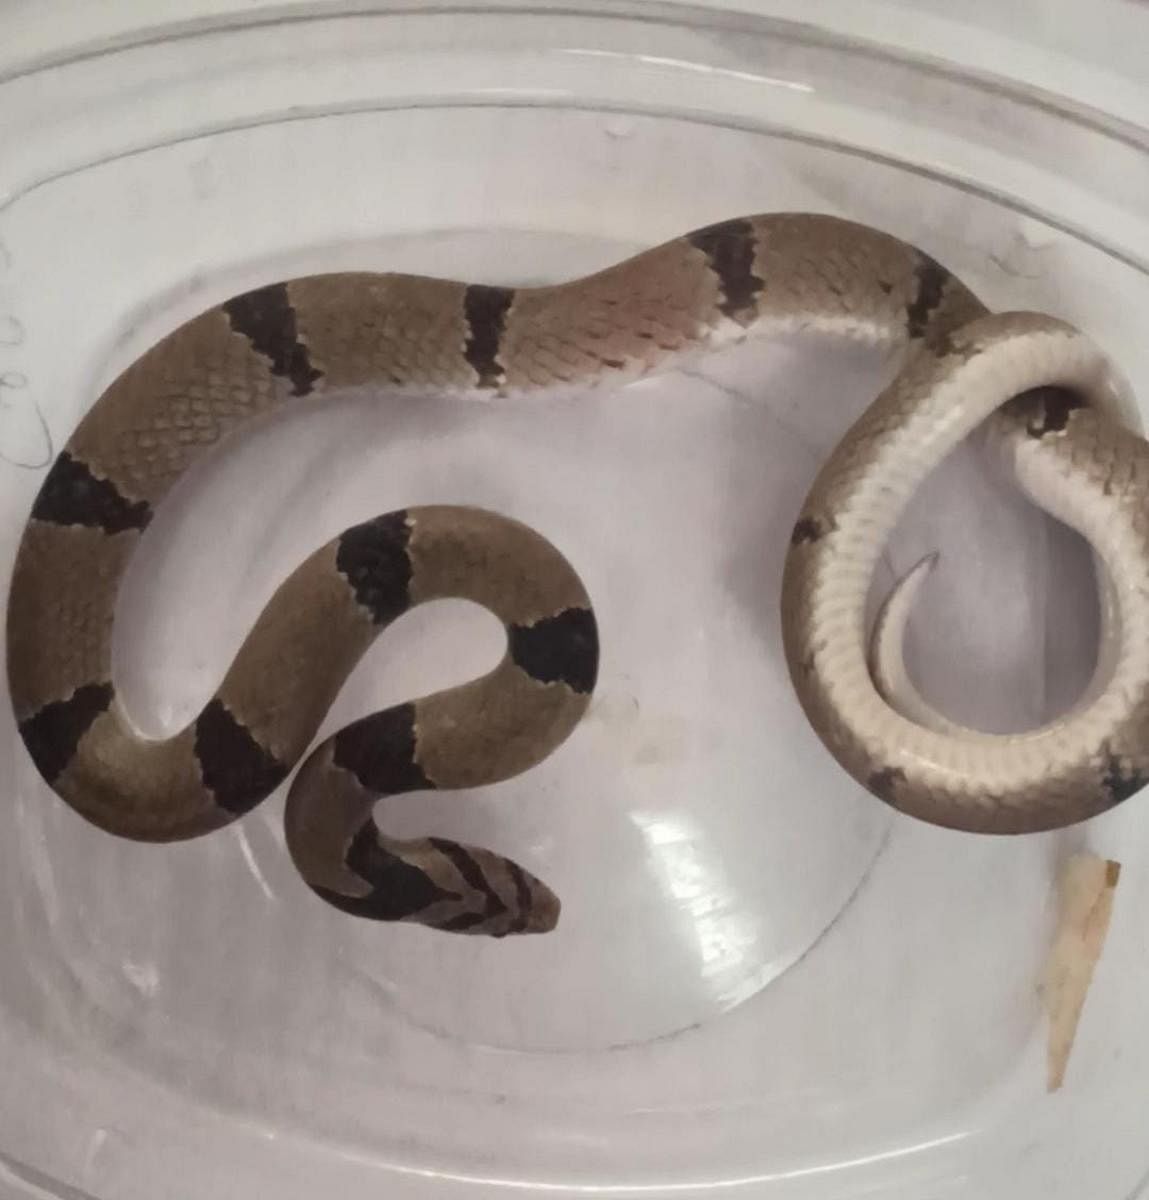 Rare banded snake rescued